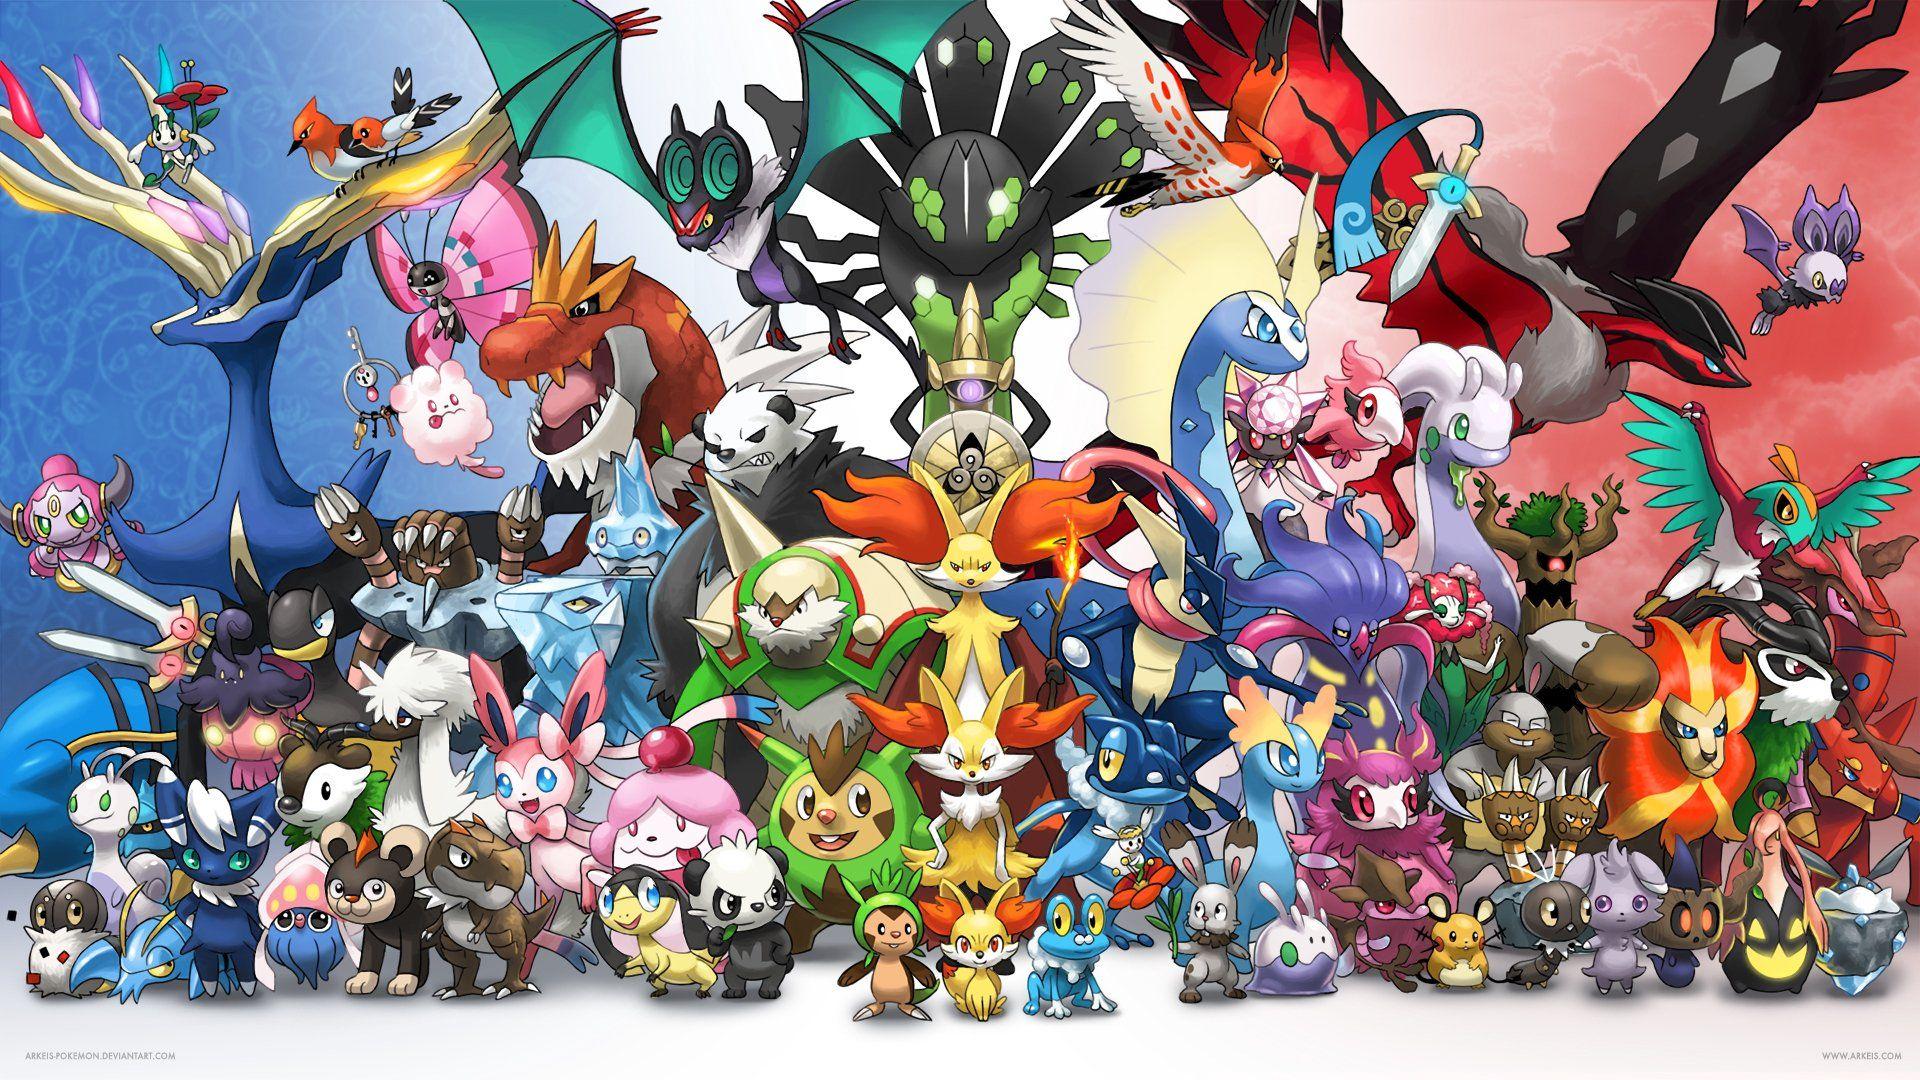 Zygarde (Pokémon) HD Wallpaper and Background Image